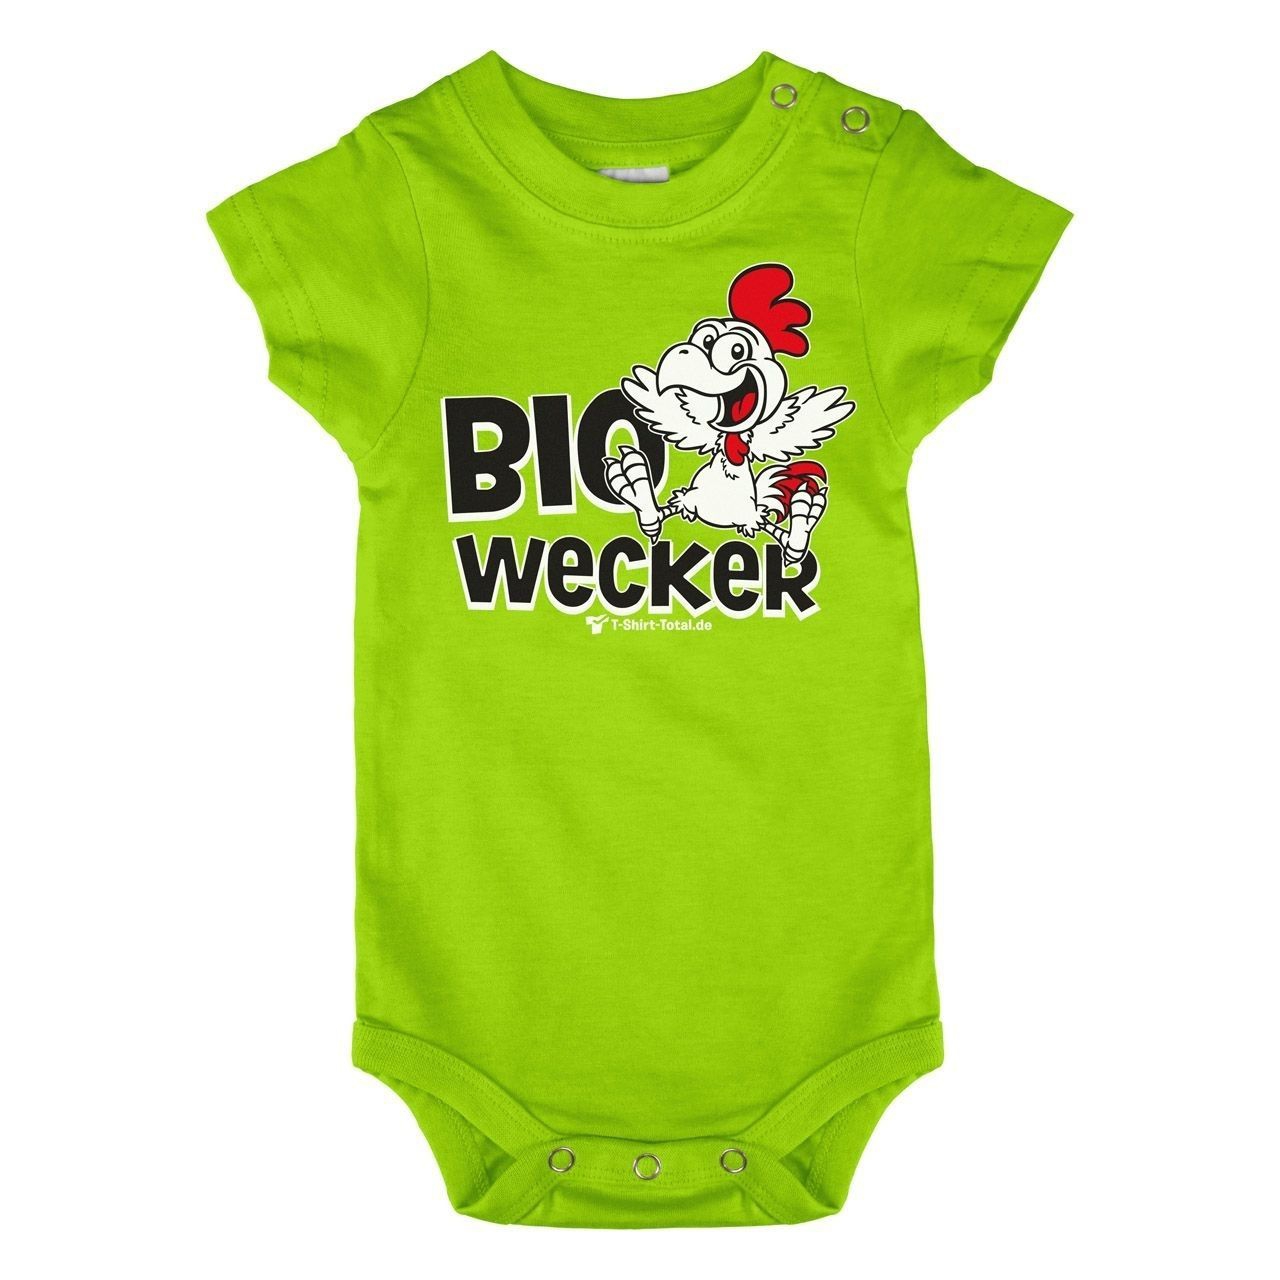 Bio Wecker Baby Body Kurzarm gelb 68 / 74